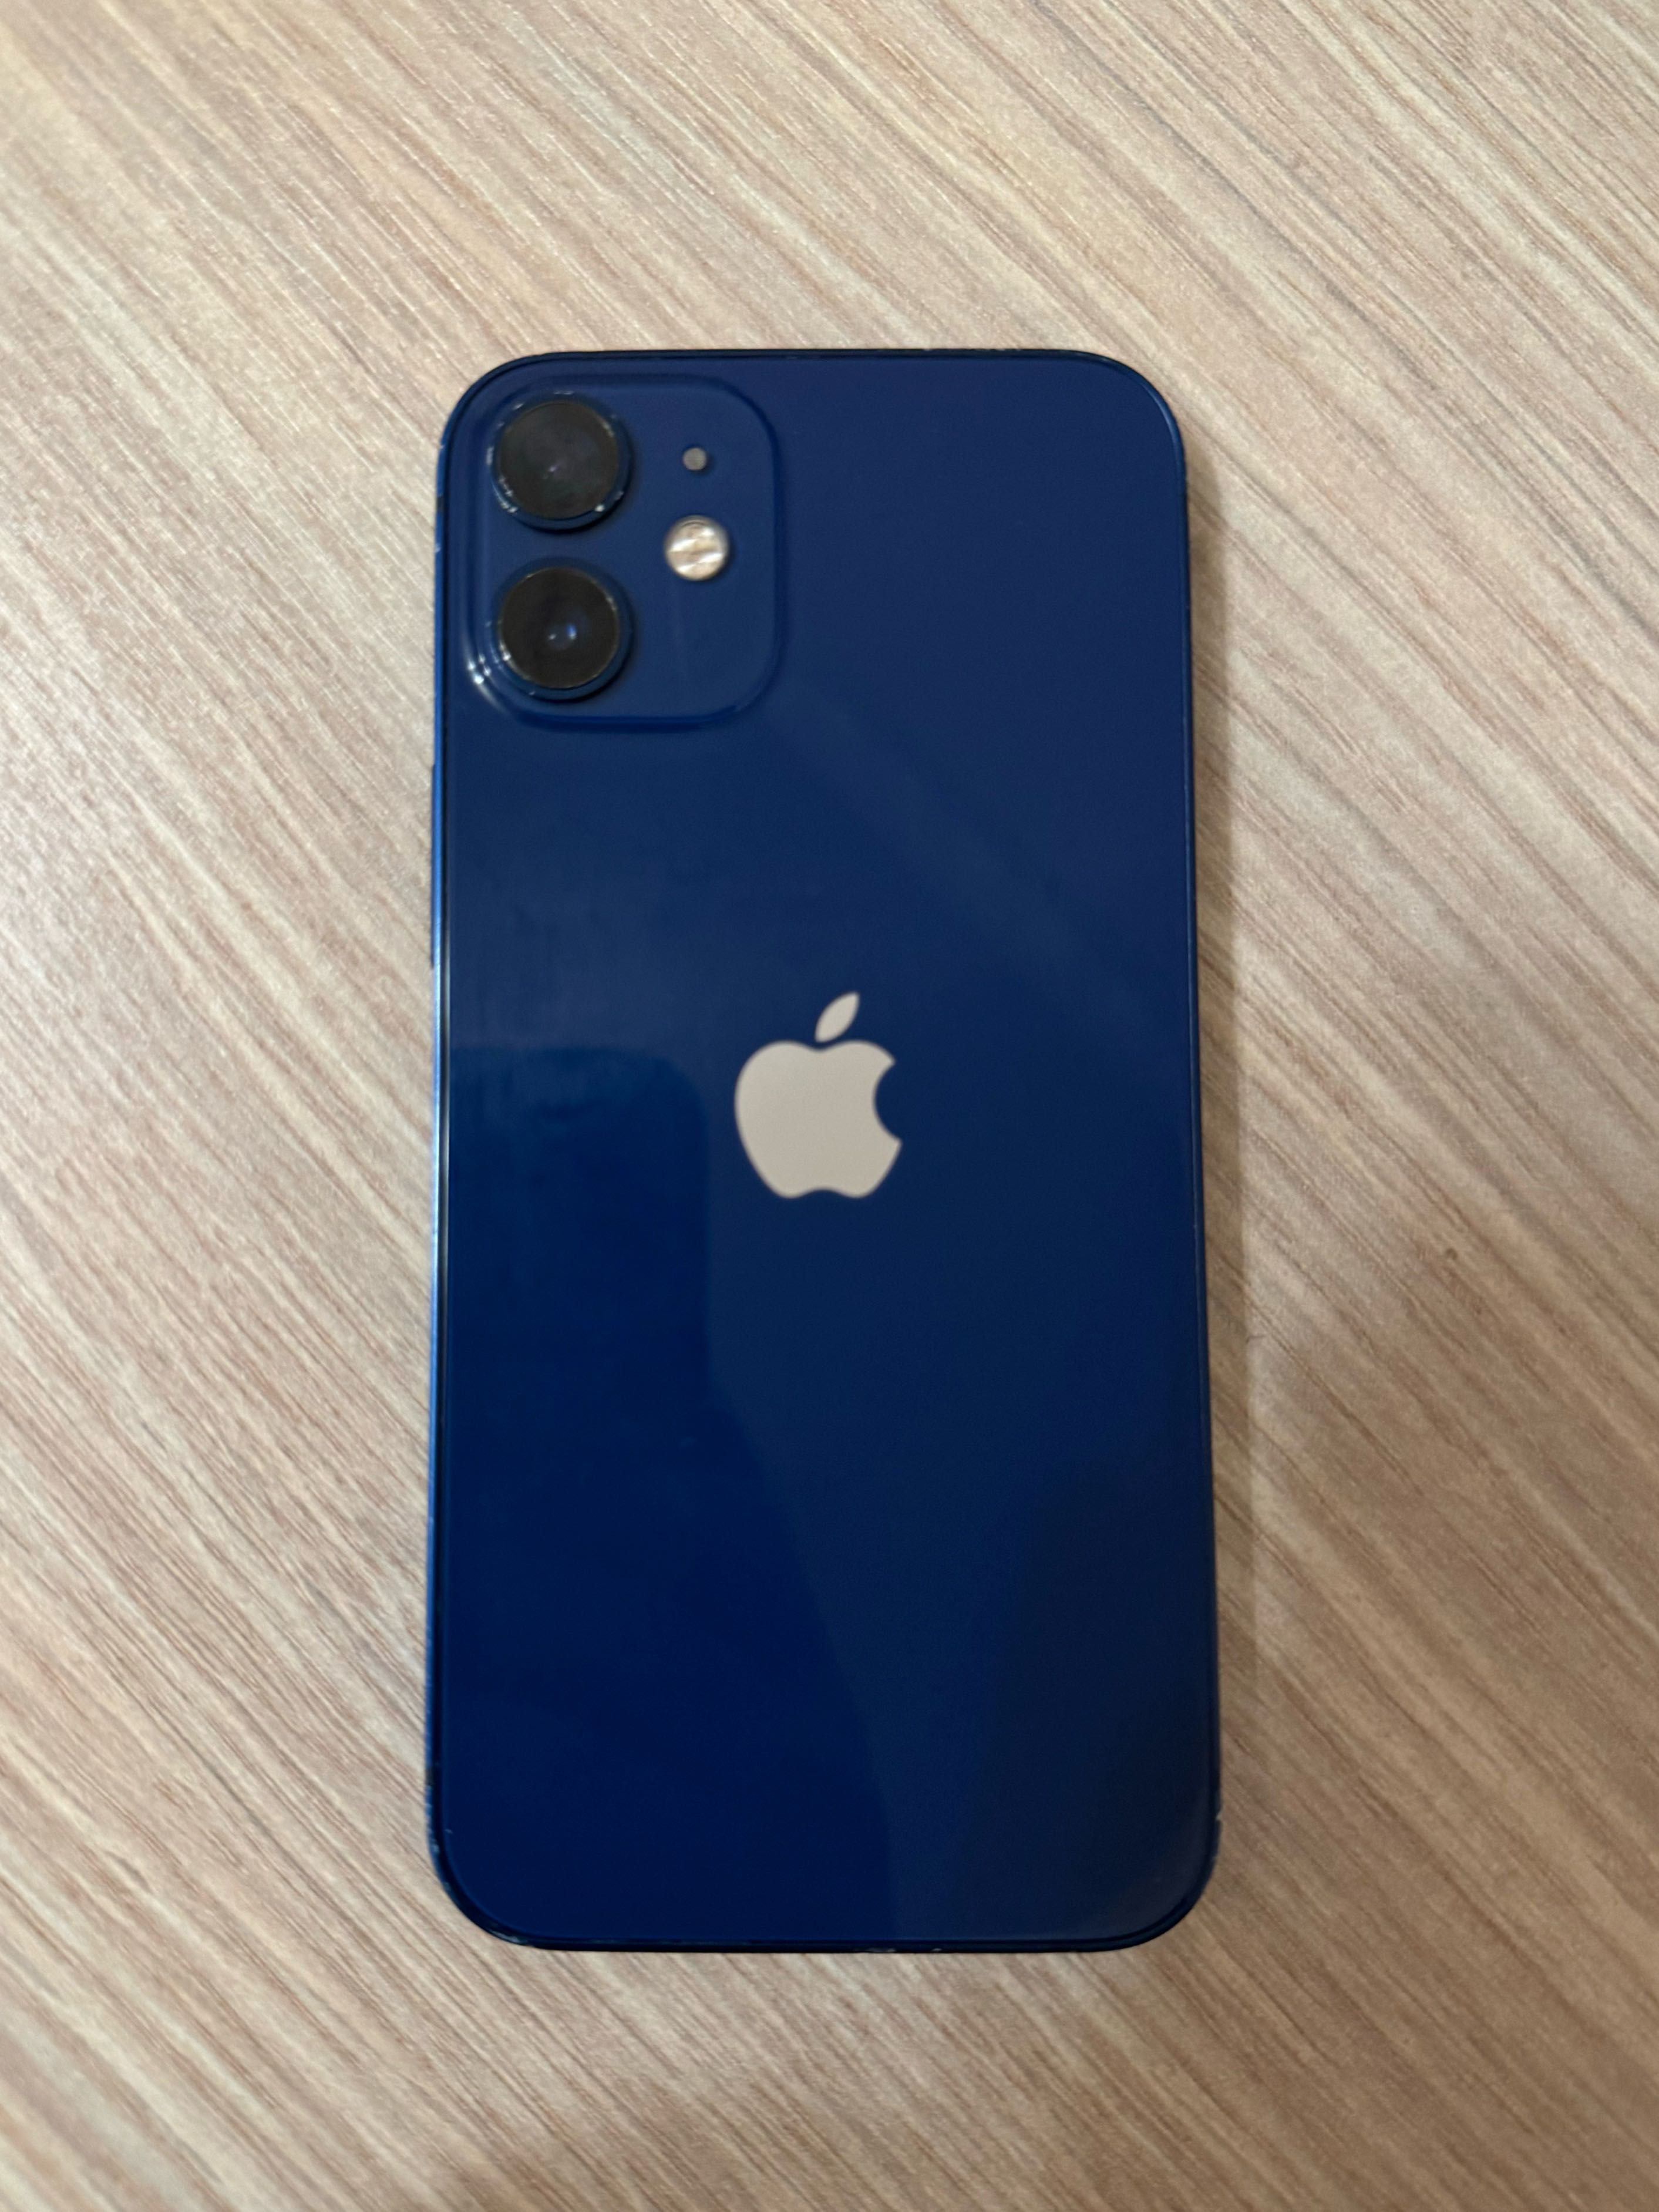 Iphone 12 mini, blue